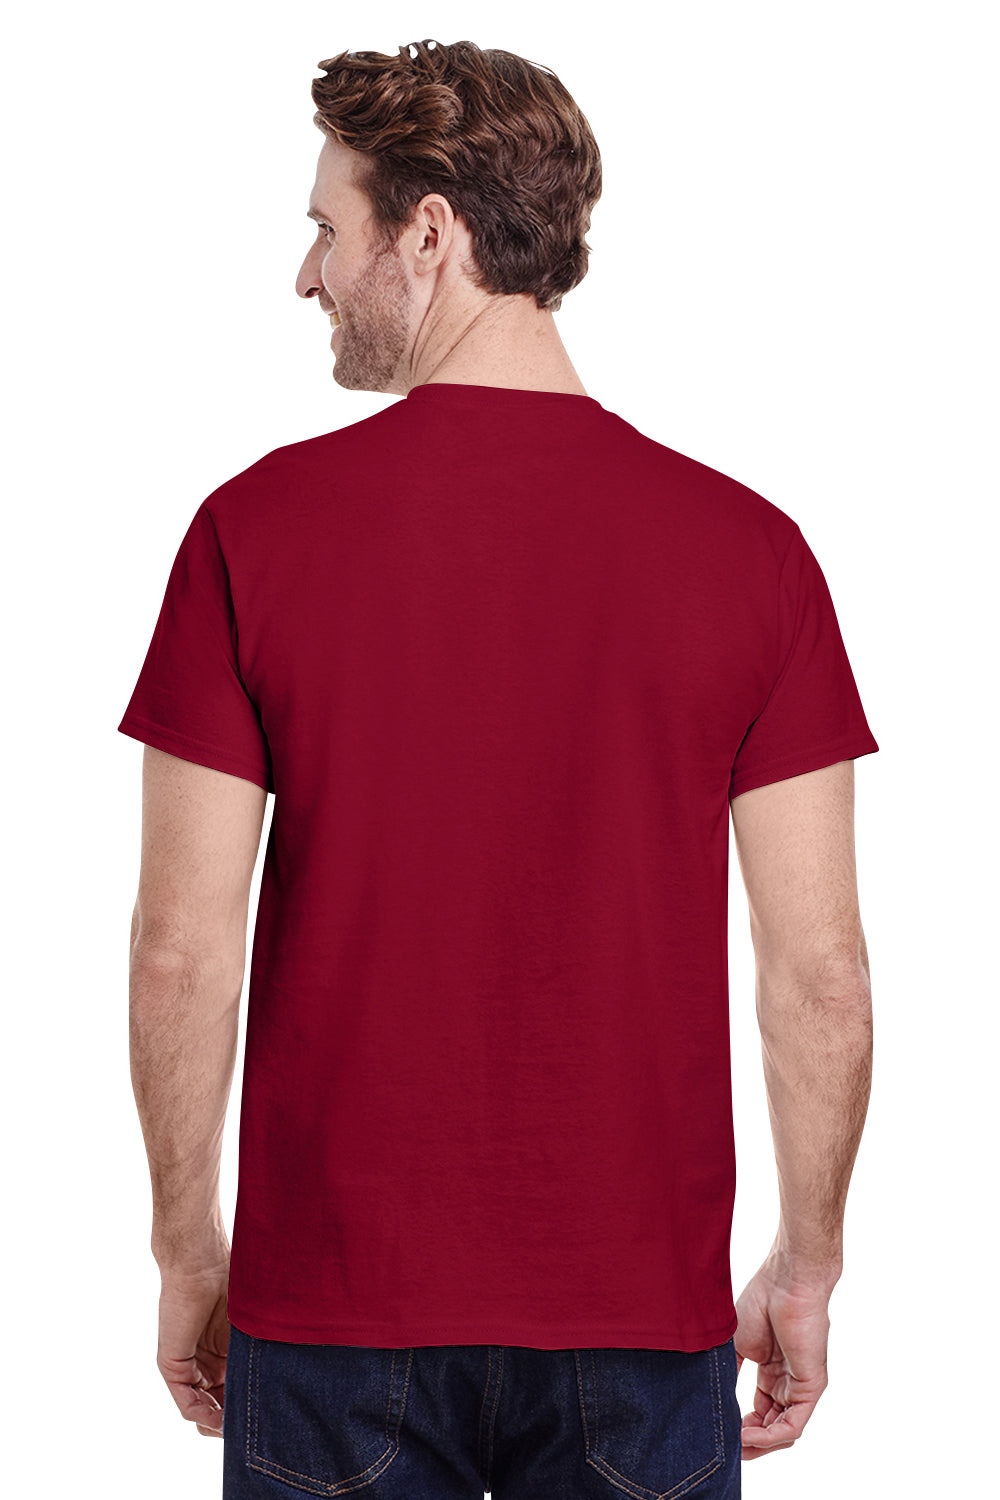 Gildan G500 Mens Short Sleeve Crewneck T-Shirt Cardinal Red Back